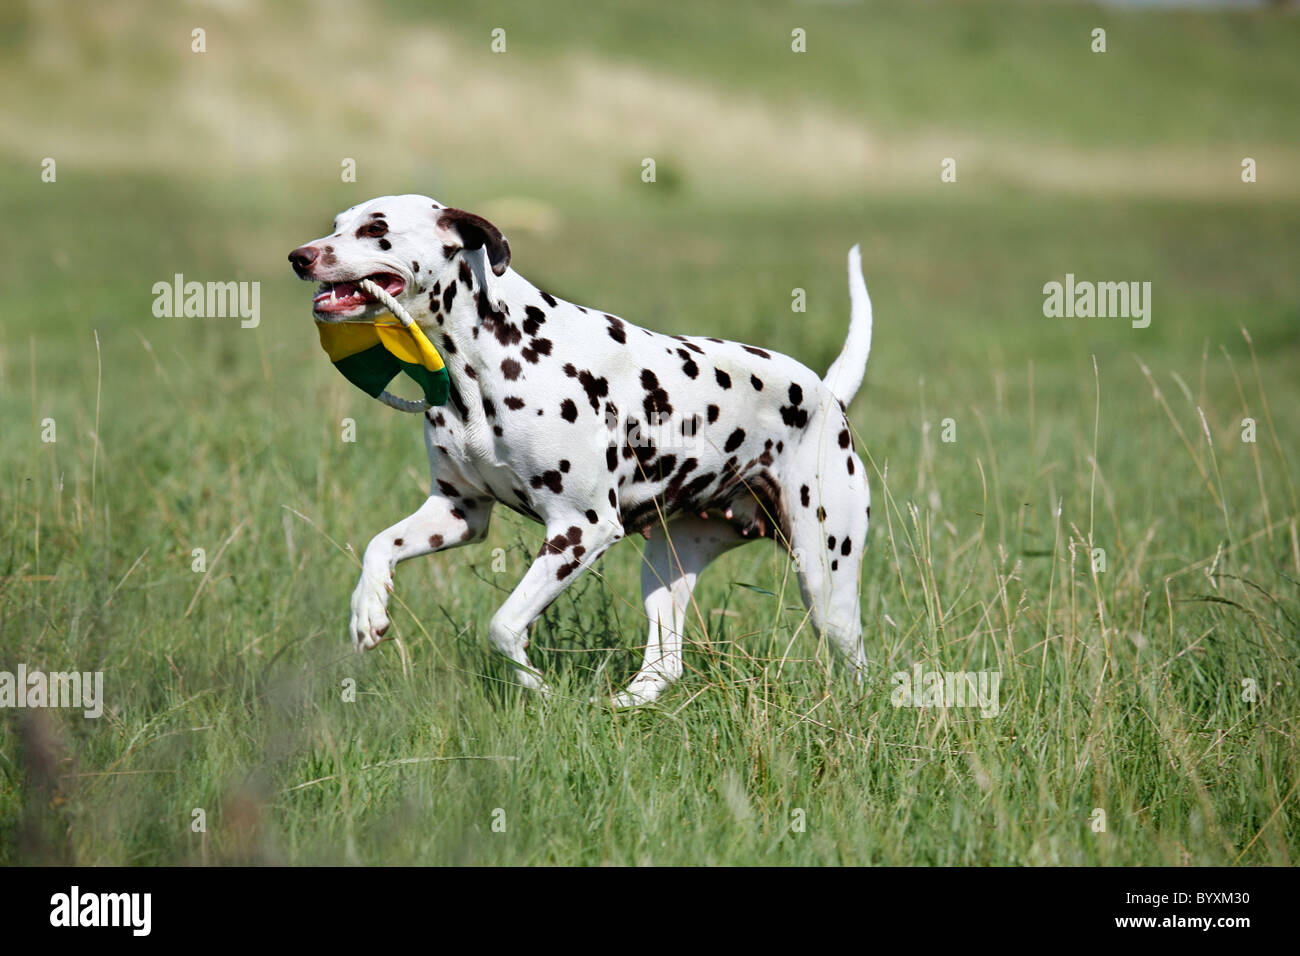 rennender Dalmatiner / running Dalmatian Stock Photo